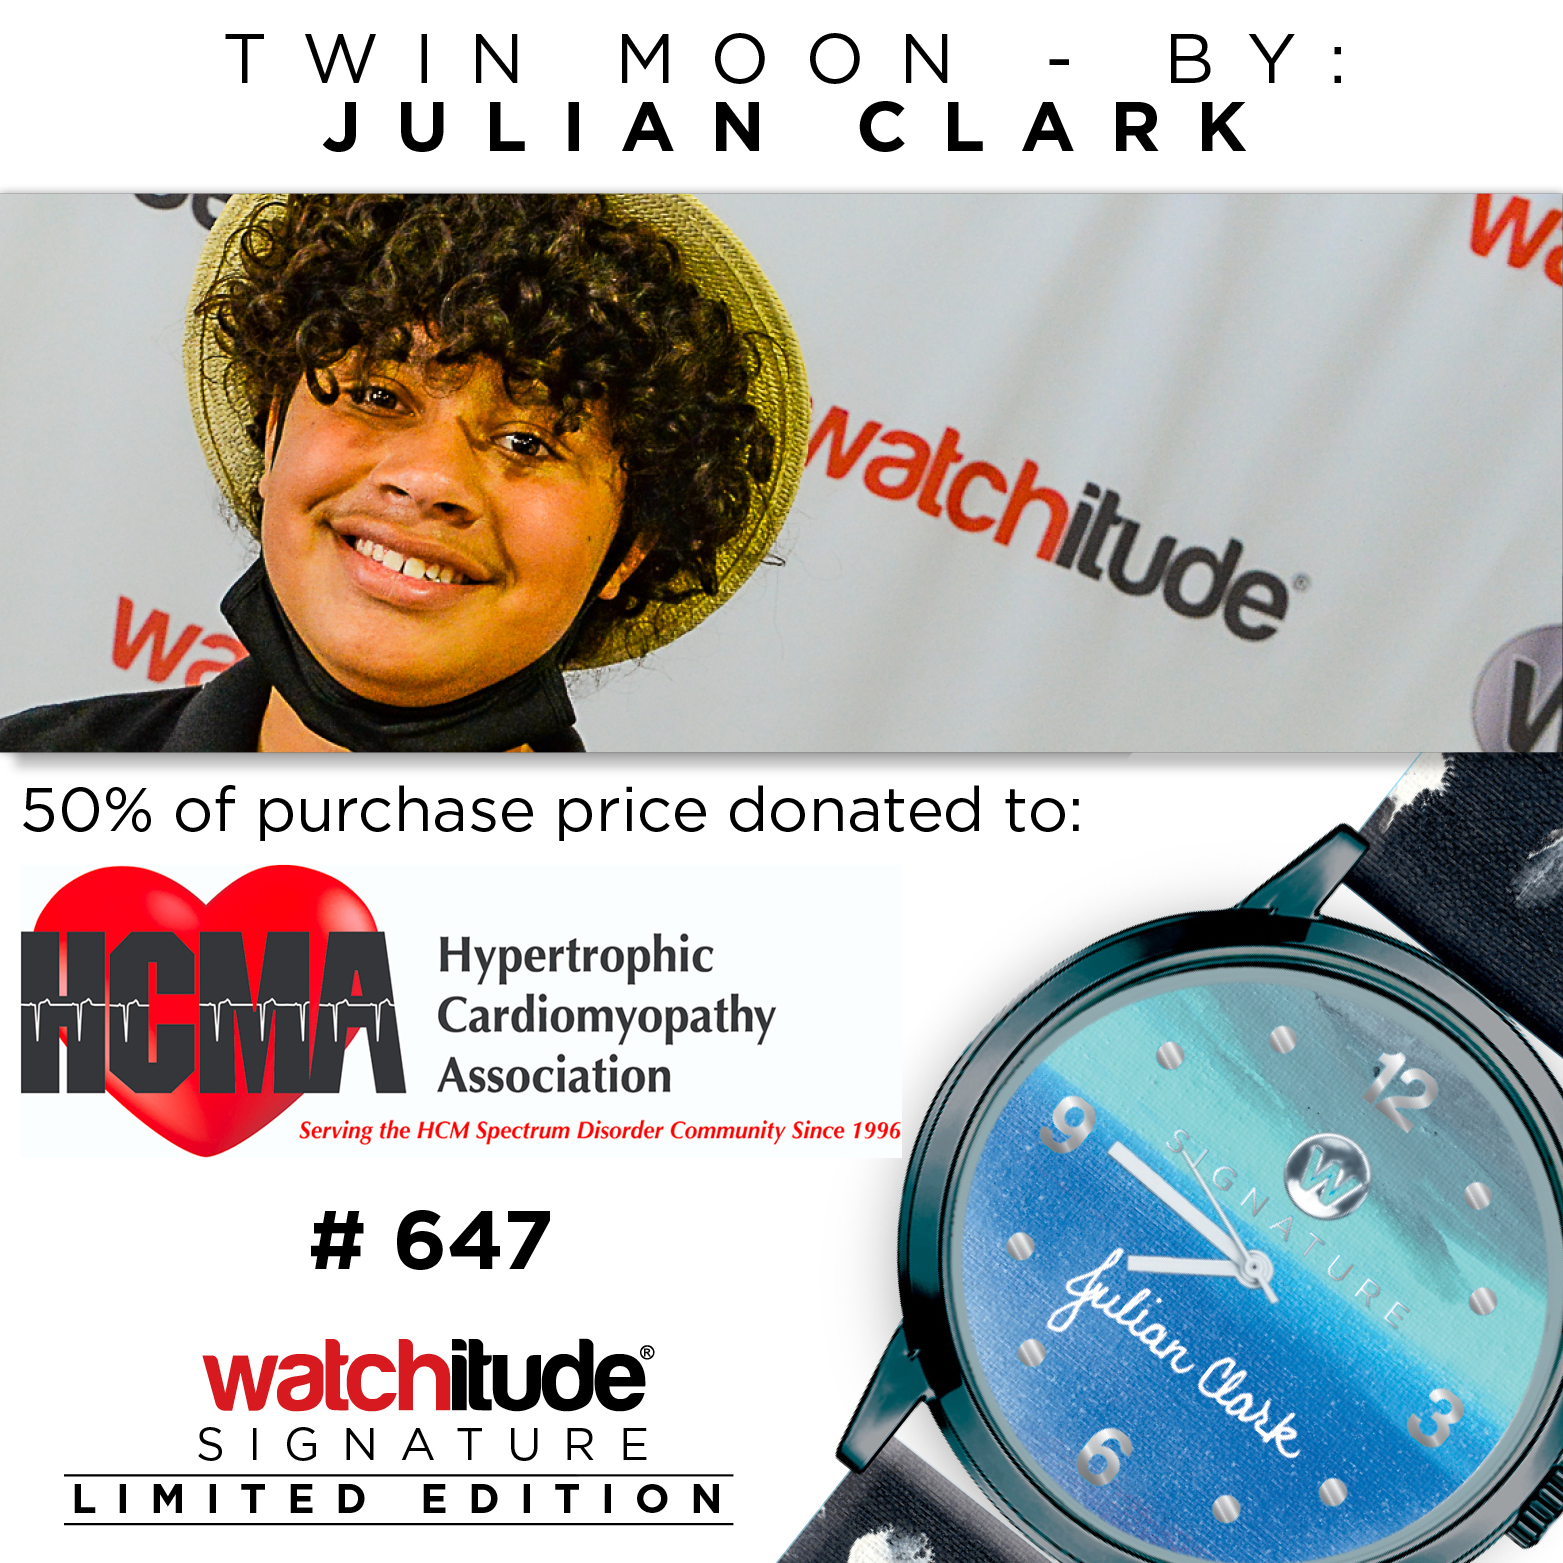 Twin Moon - Julian Clark Signature watch